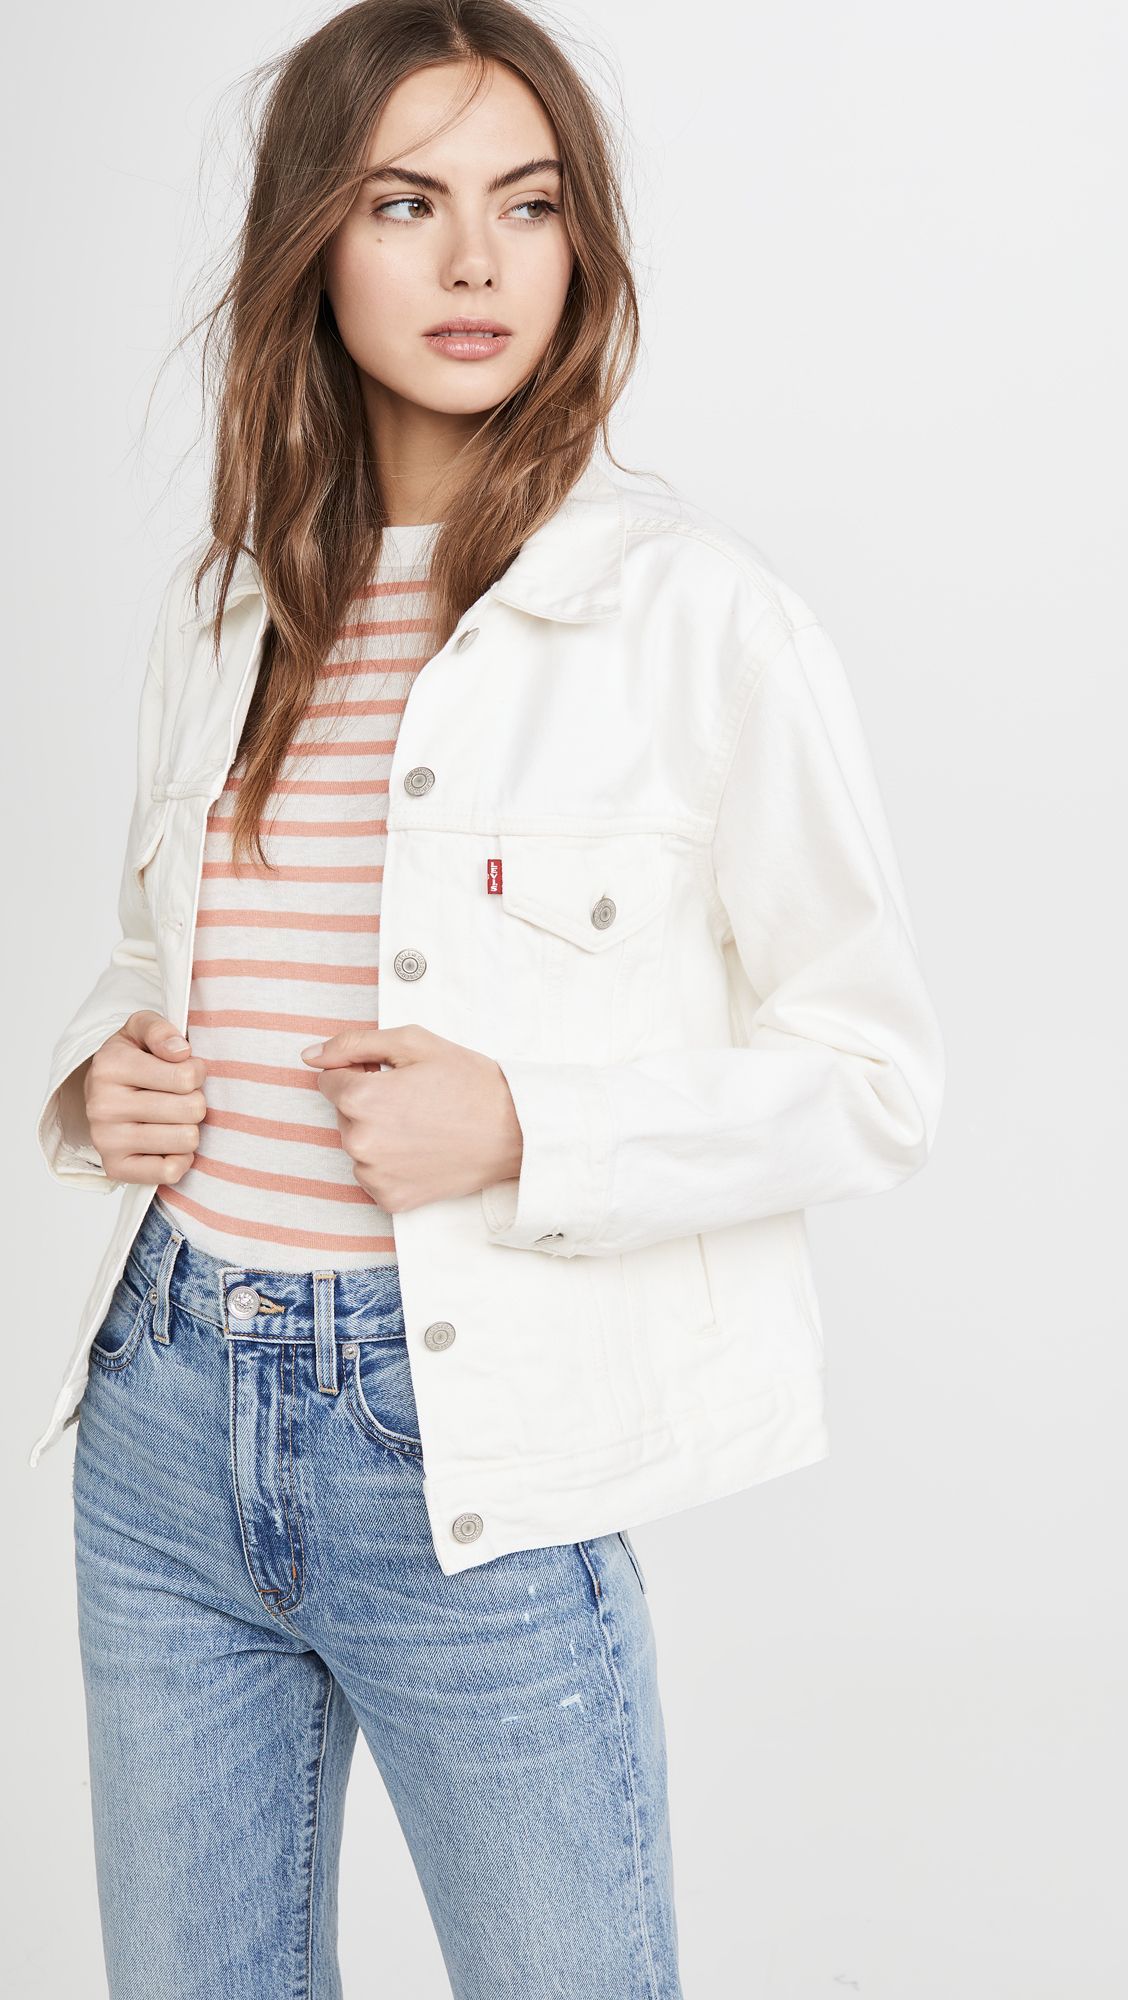 stylish summer jackets for ladies